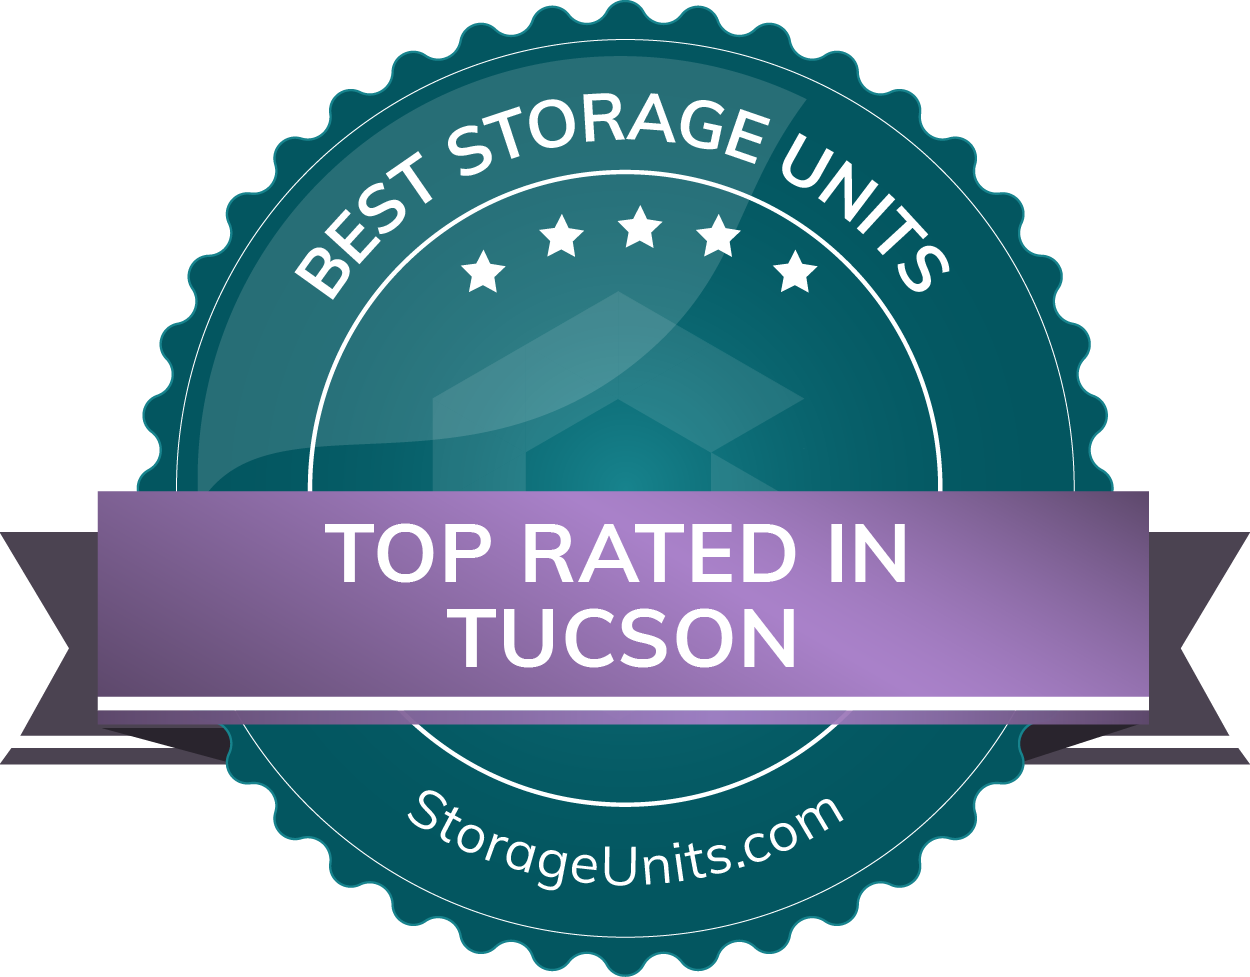 Best Self Storage Units in Tucson, Arizona of 2022